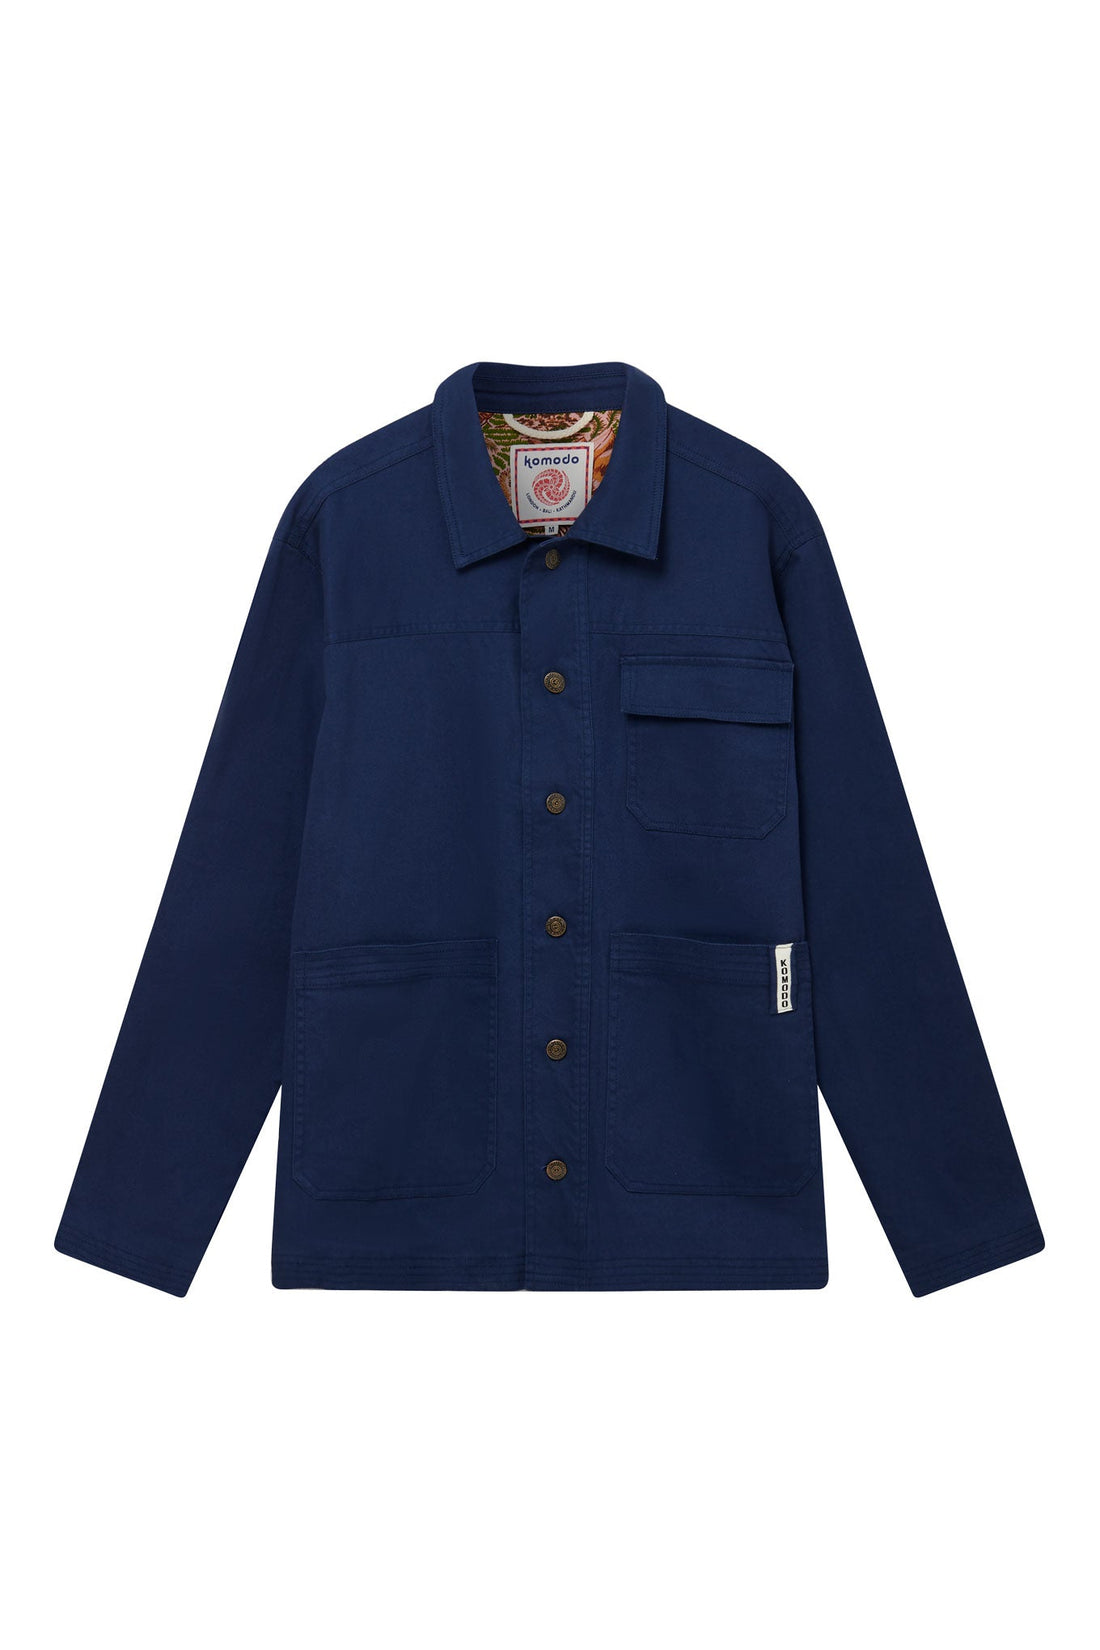 LANDON - Organic Cotton Jacket Navy